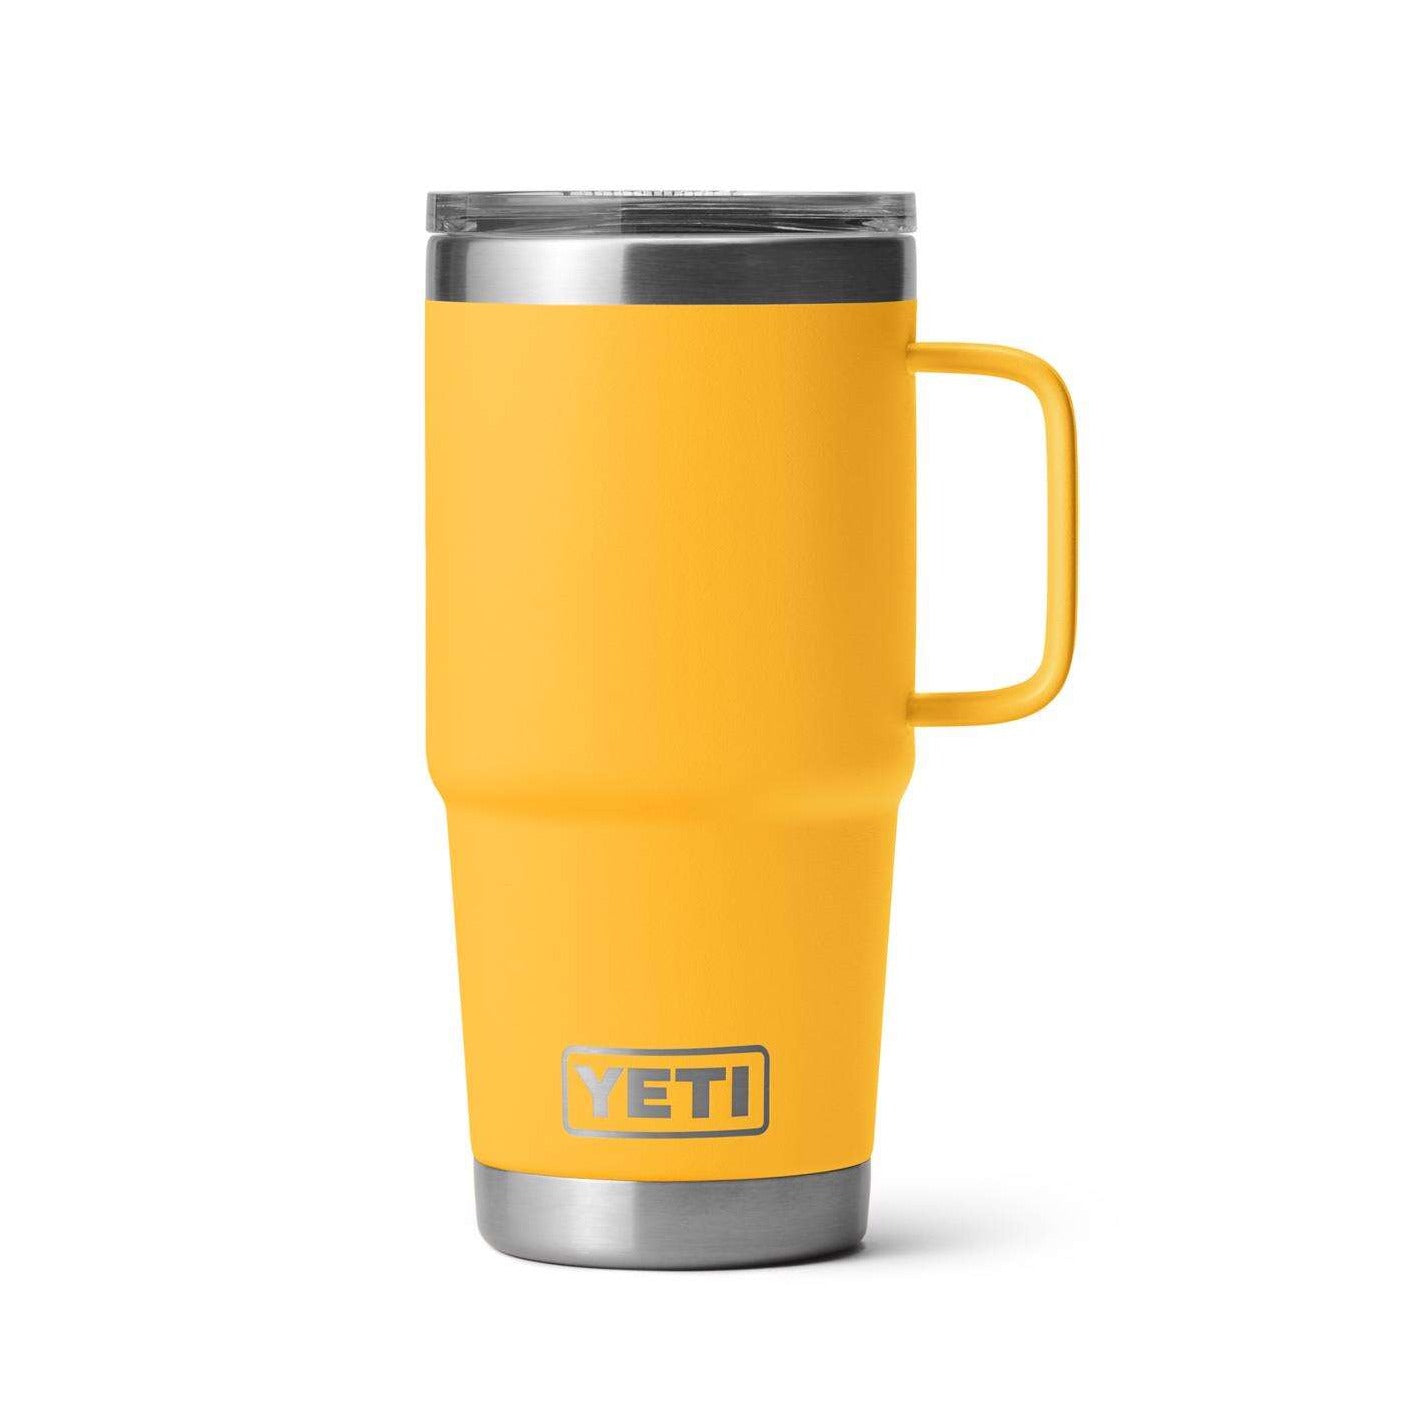 Yeti Rambler 20oz Travel Mug with Stronghold Lid - Camp Green